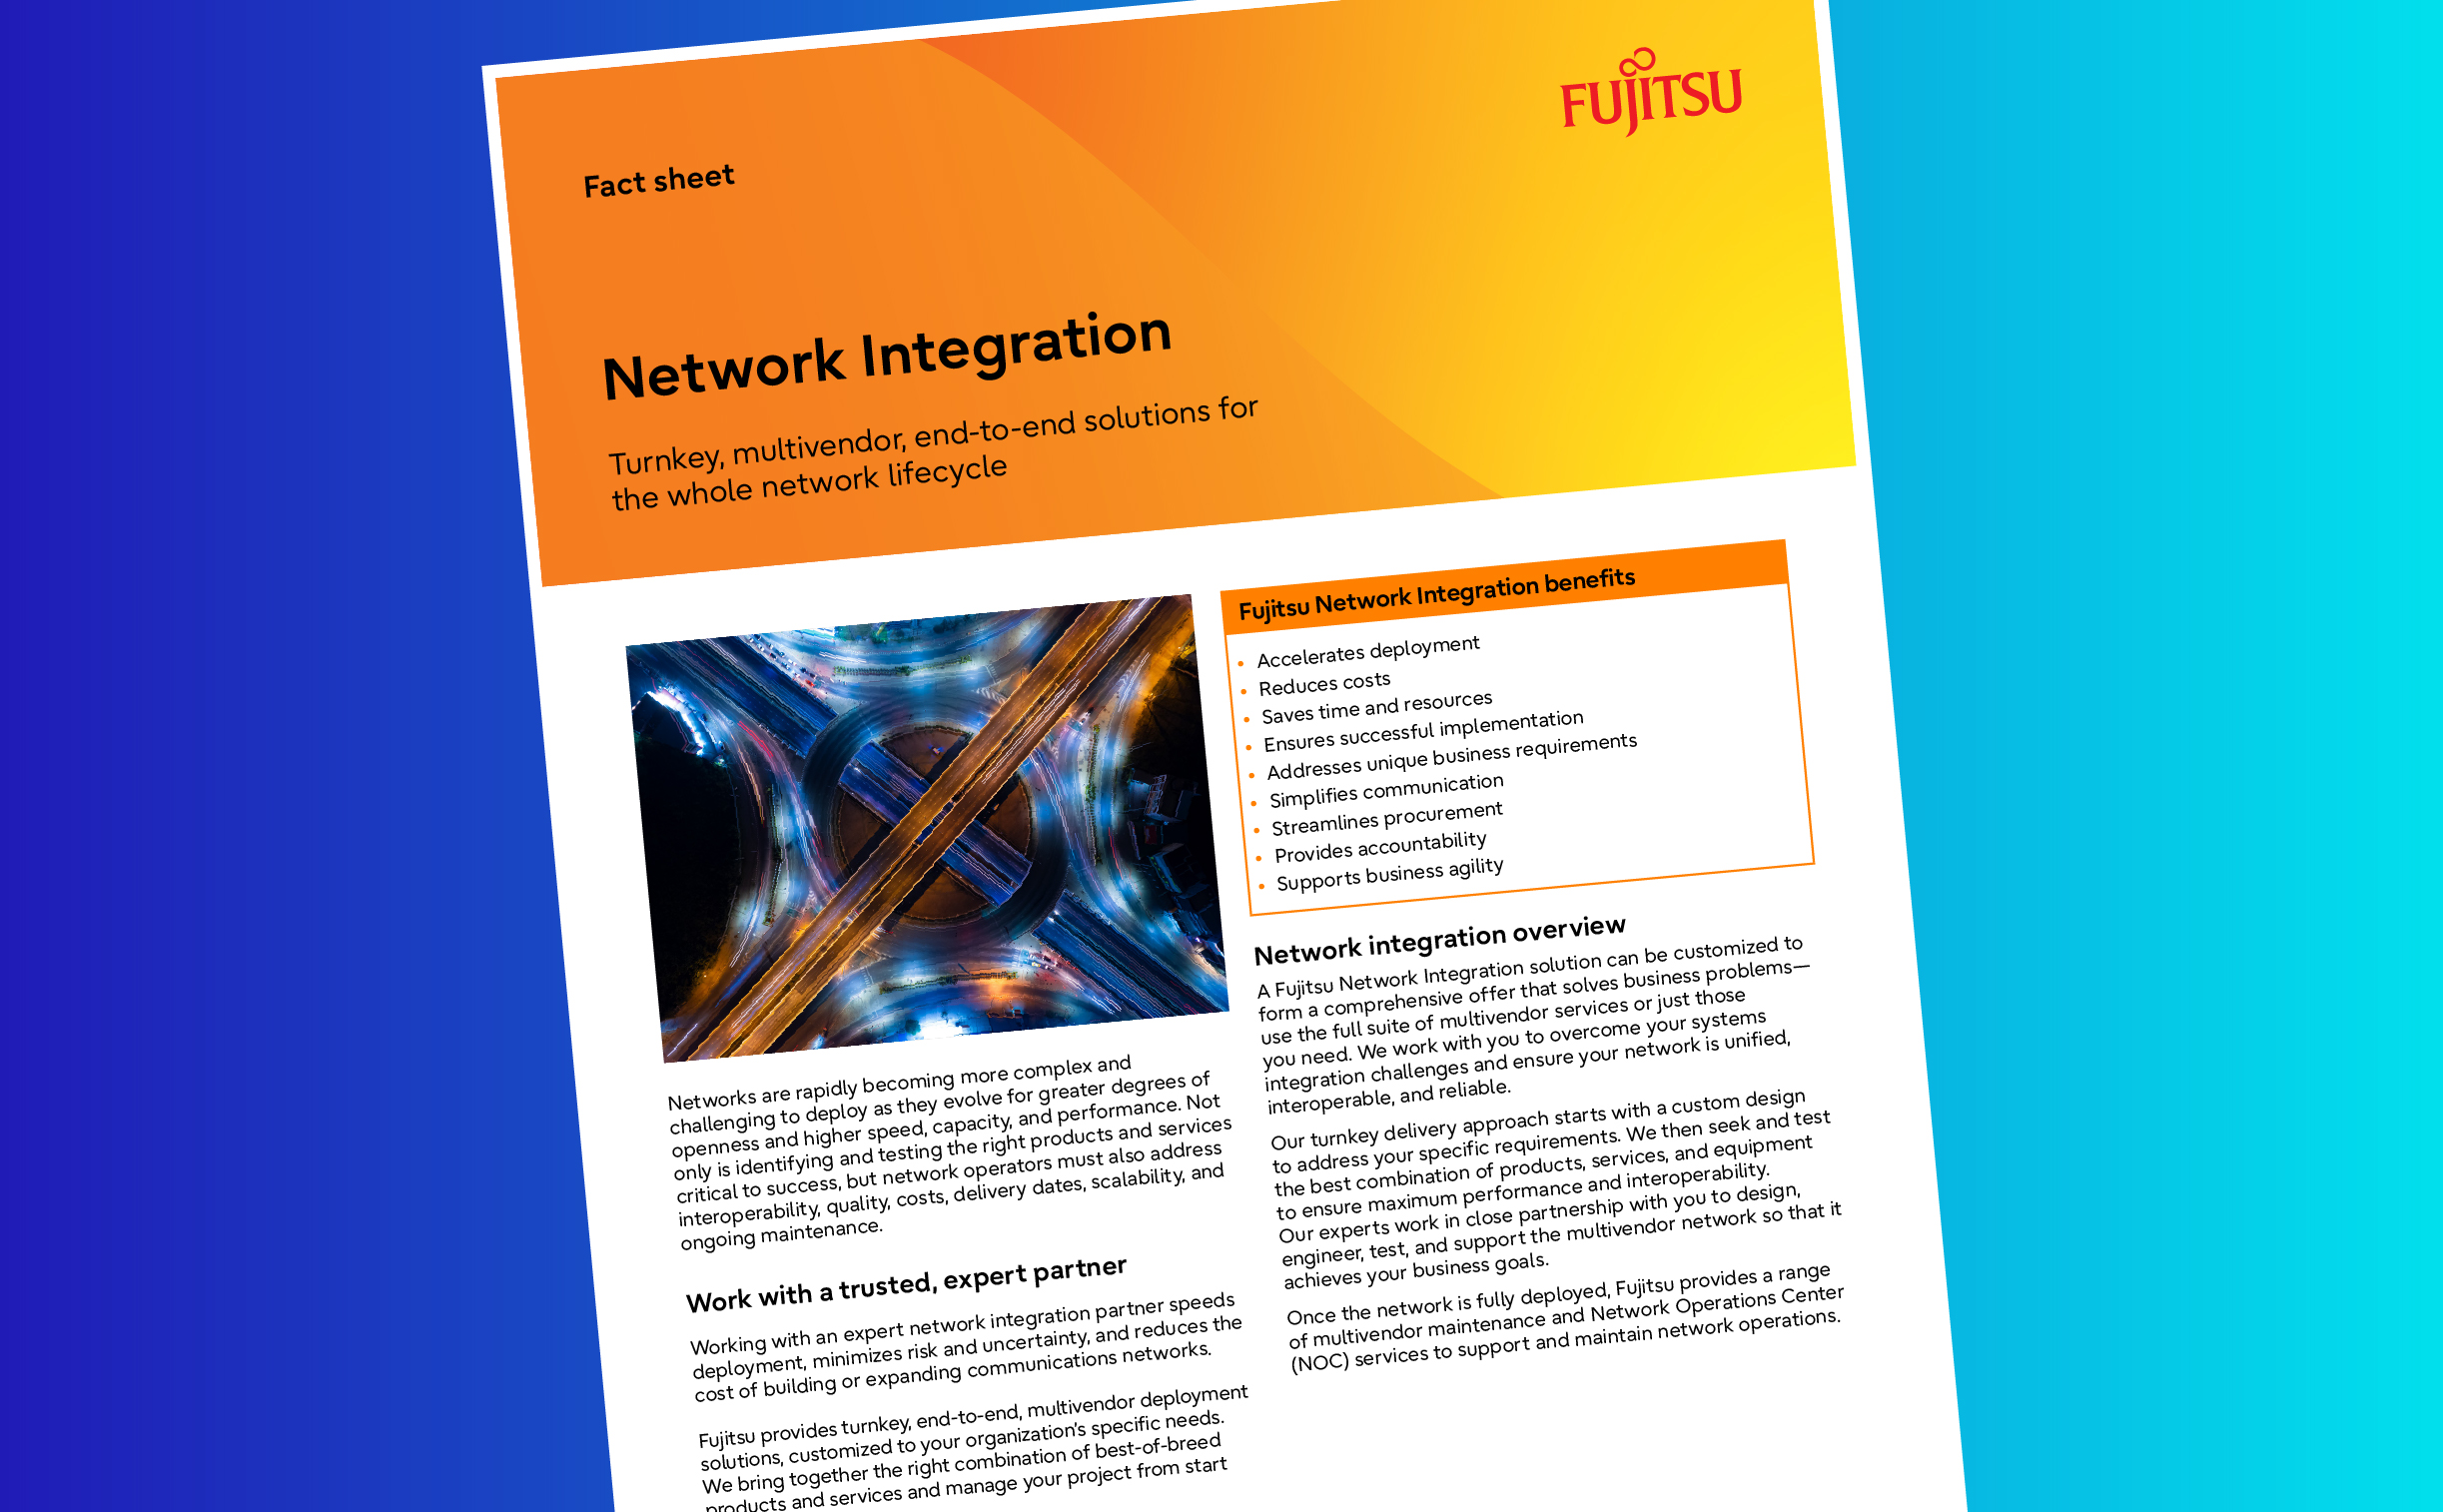 Network integration